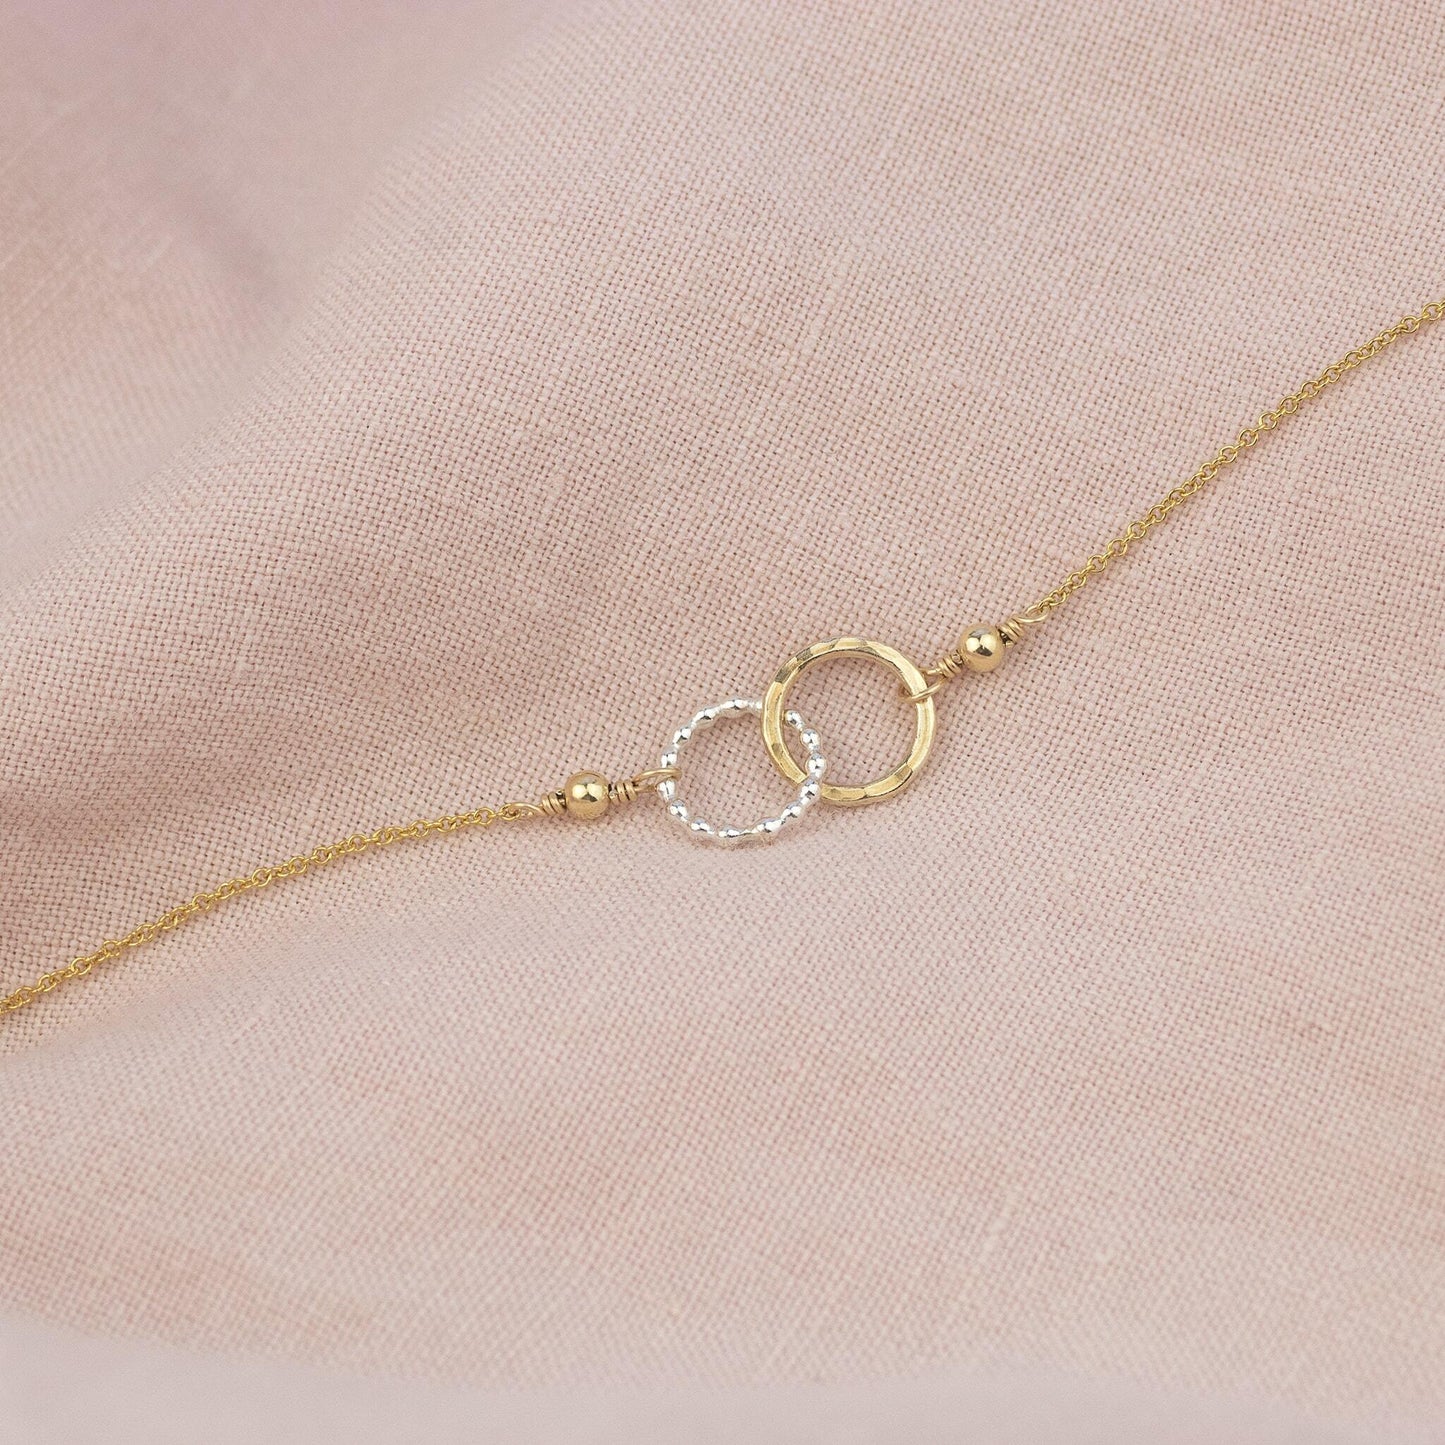 Love Knot Bracelet - Linked for a Lifetime - Silver & Gold